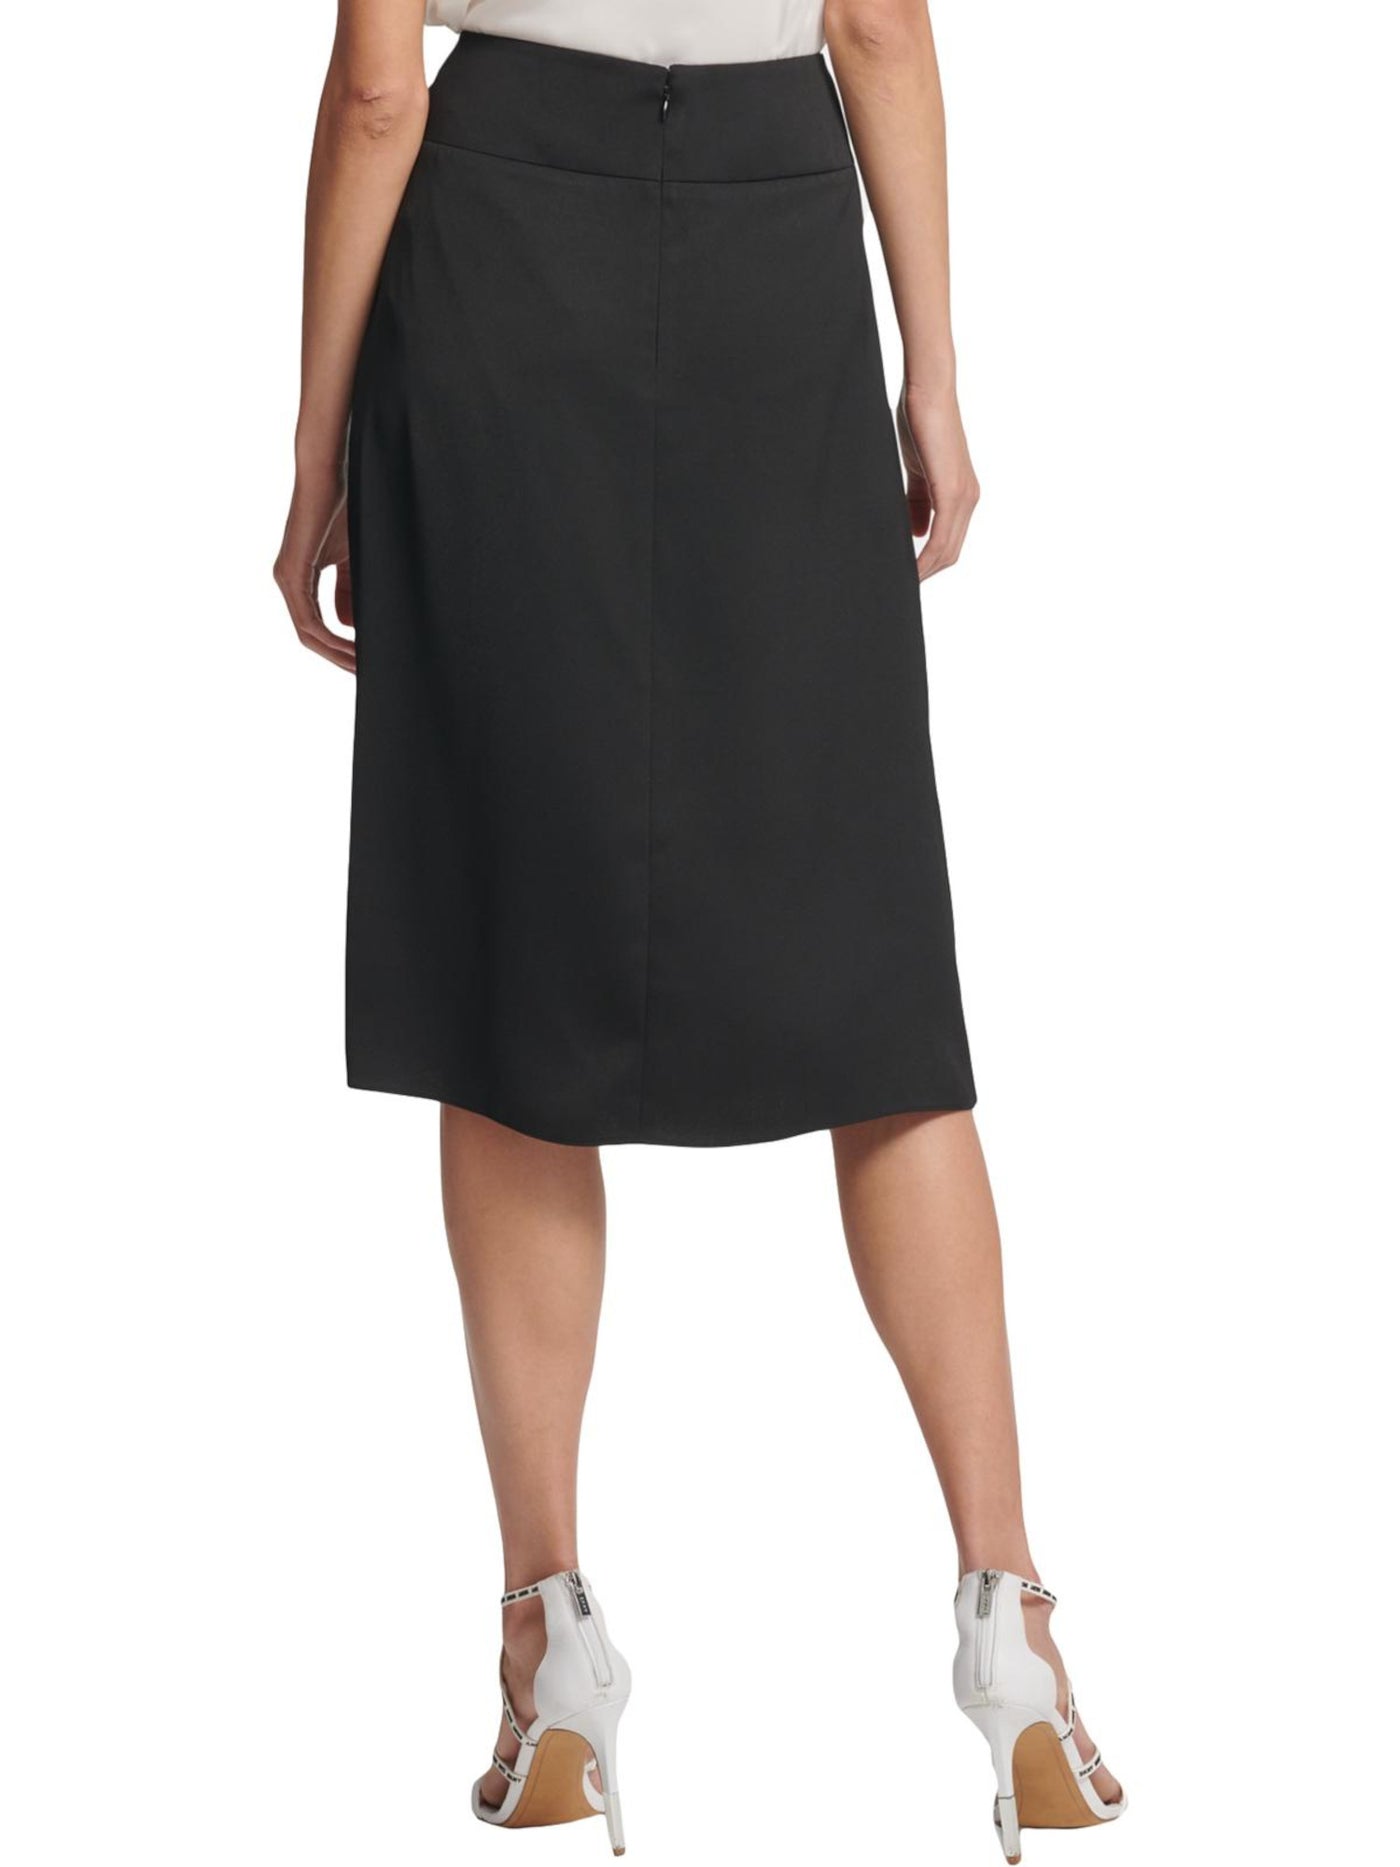 DKNY Womens Black Ruffled Zippered Unlined Below The Knee Wear To Work A-Line Skirt L